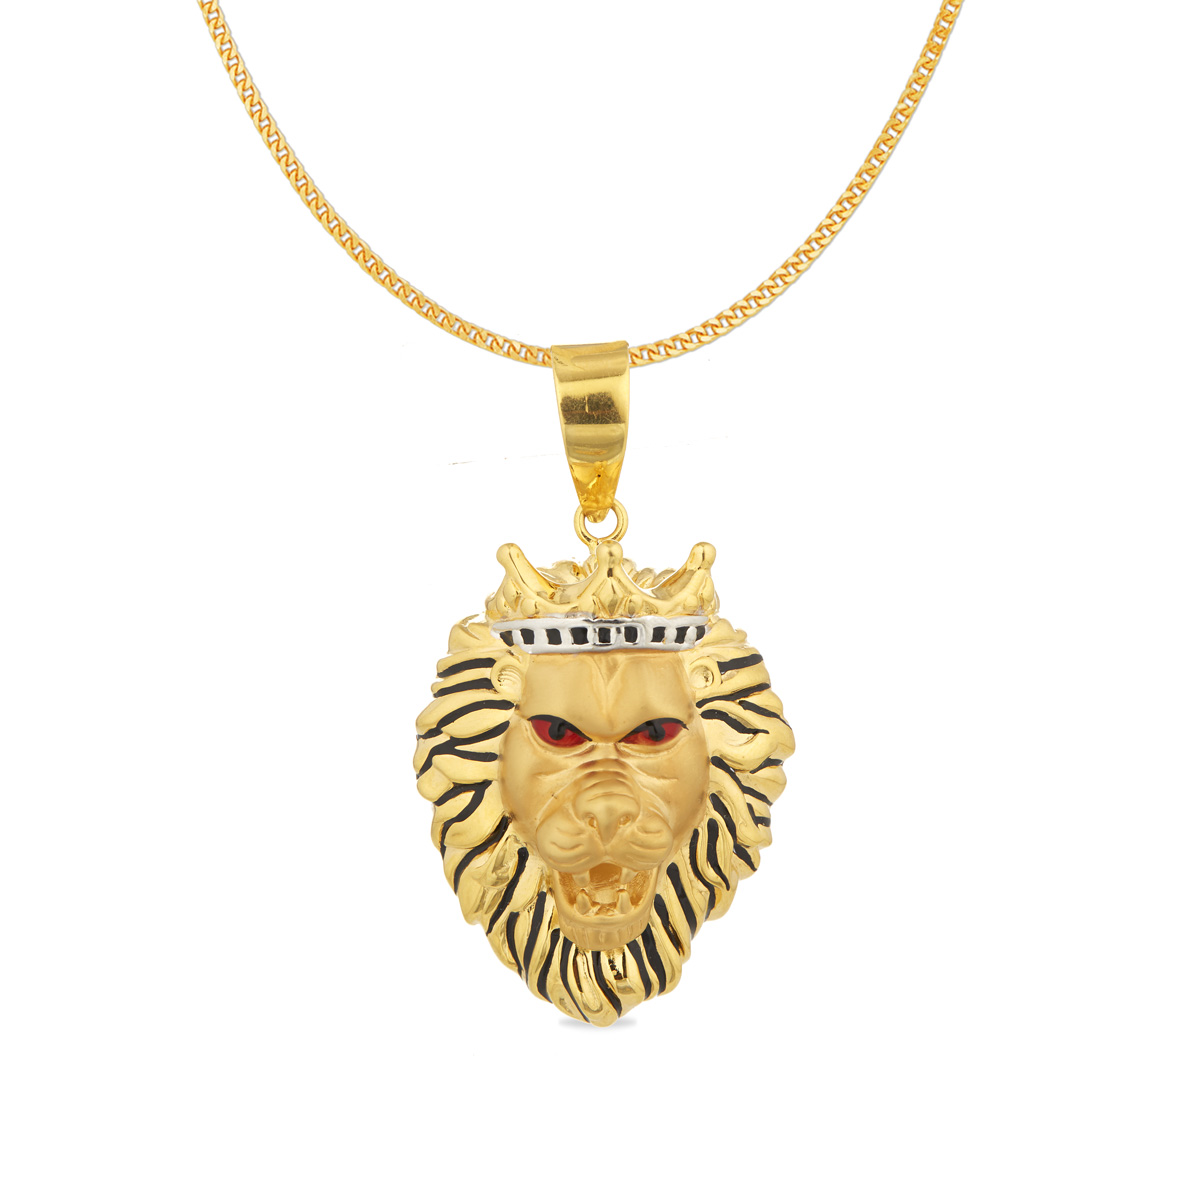 The Lion King Pendant